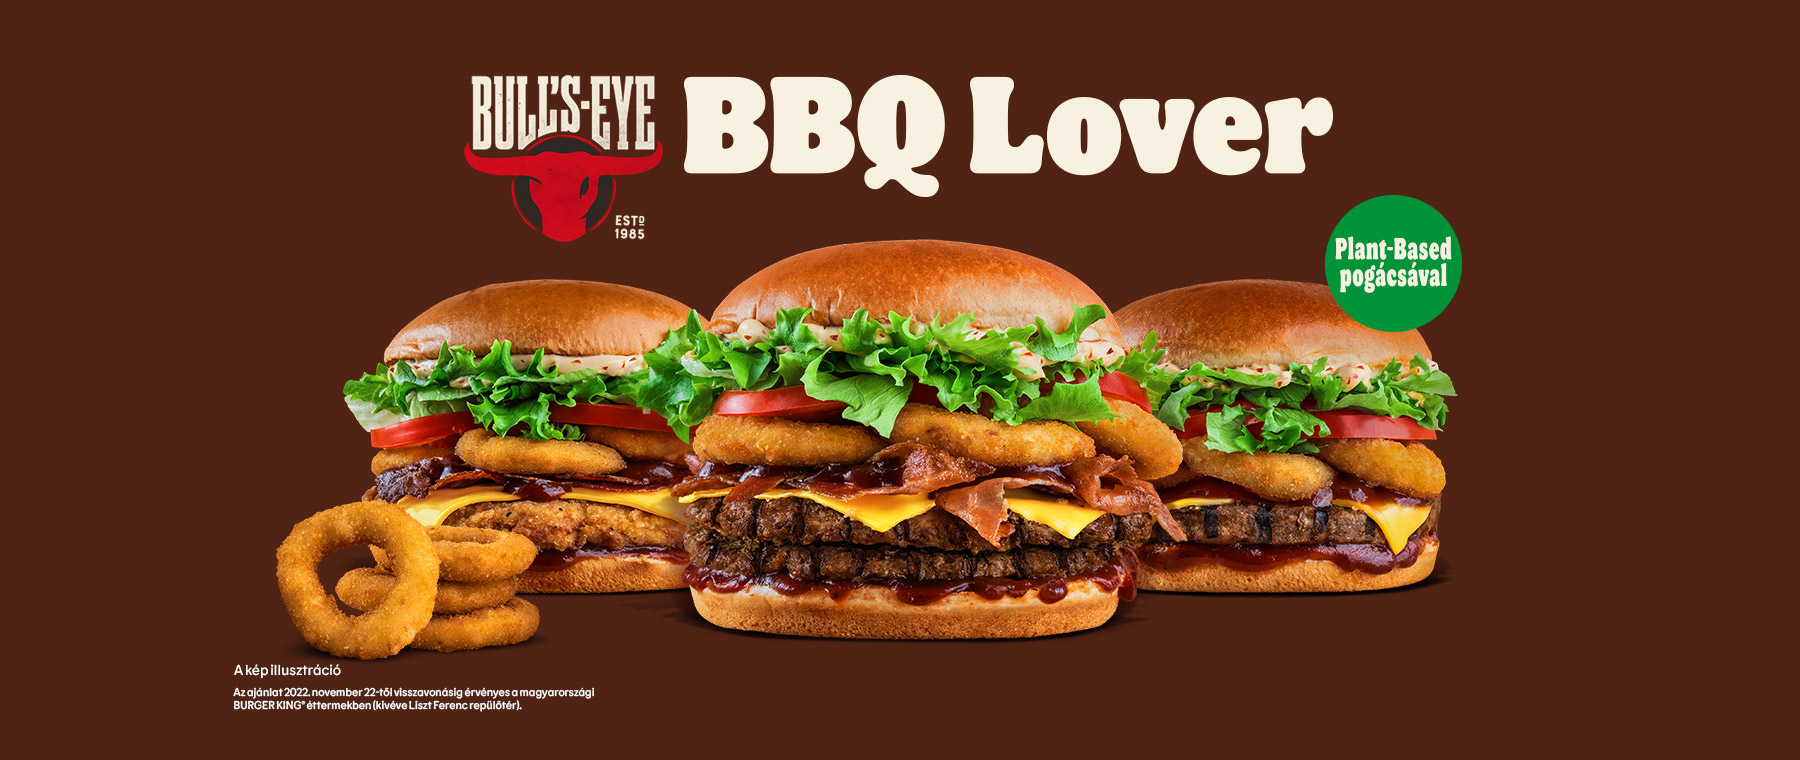 burger_king_bbq_lover_szendvics_hagymakarika_bacon.jpg